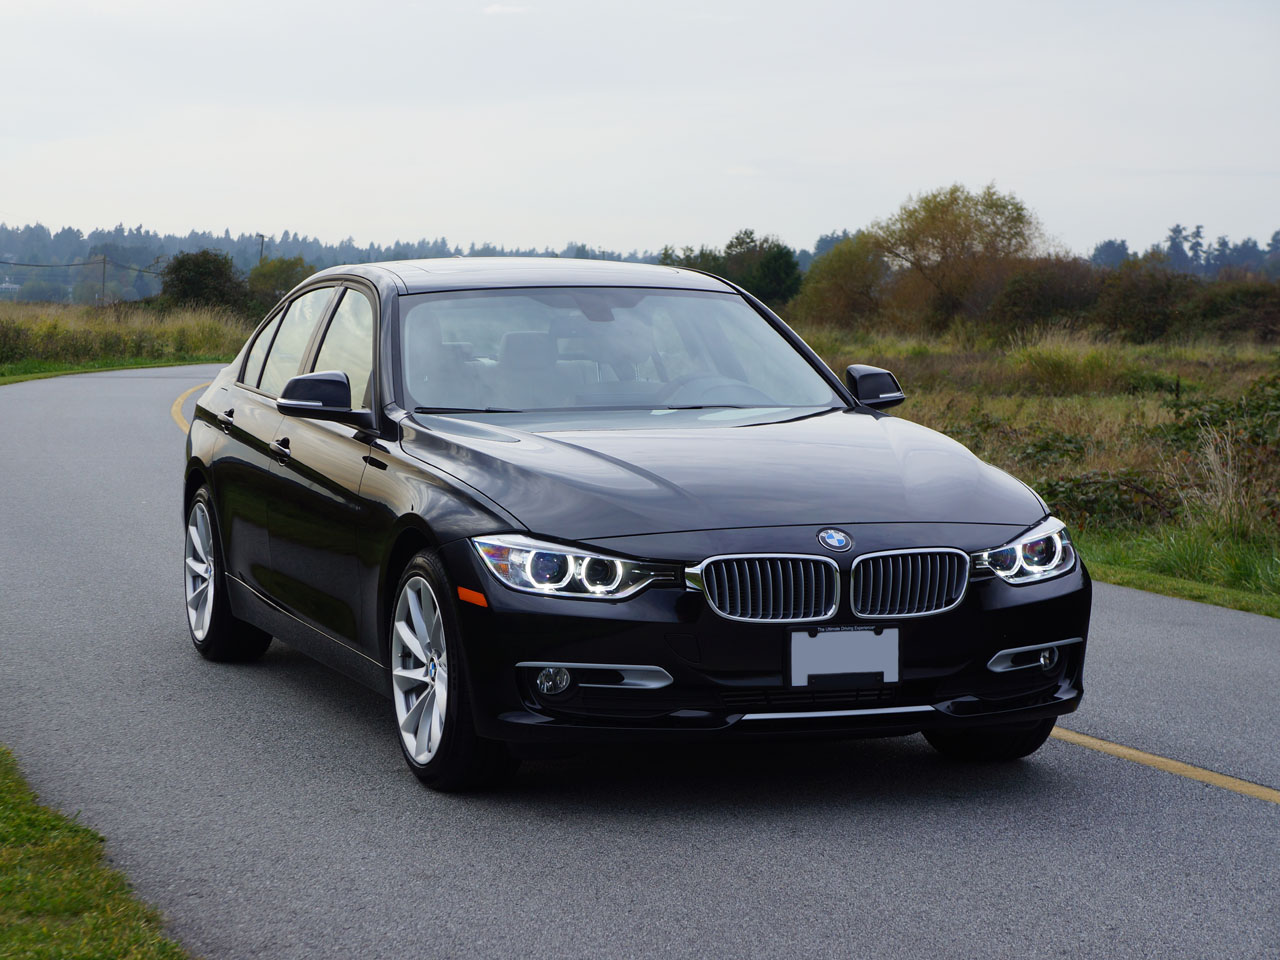 2014 BMW 320i xDrive Road Test Review | CarCostCanada